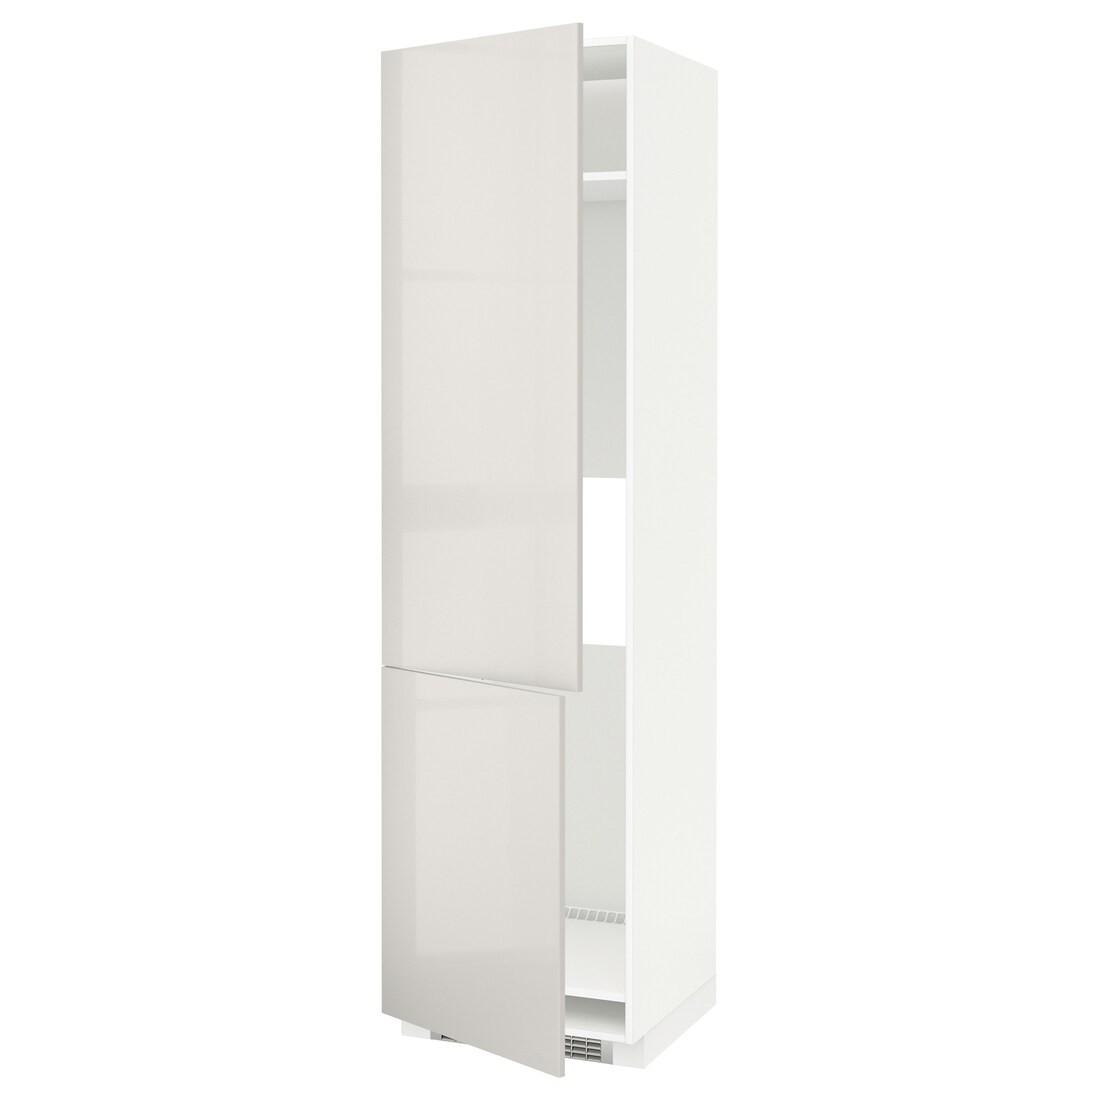 IKEA METOD МЕТОД Высокий шкаф для холодильника / морозильника / 2дверцы, белый / Ringhult светло-серый, 60x60x220 см 99142736 991.427.36